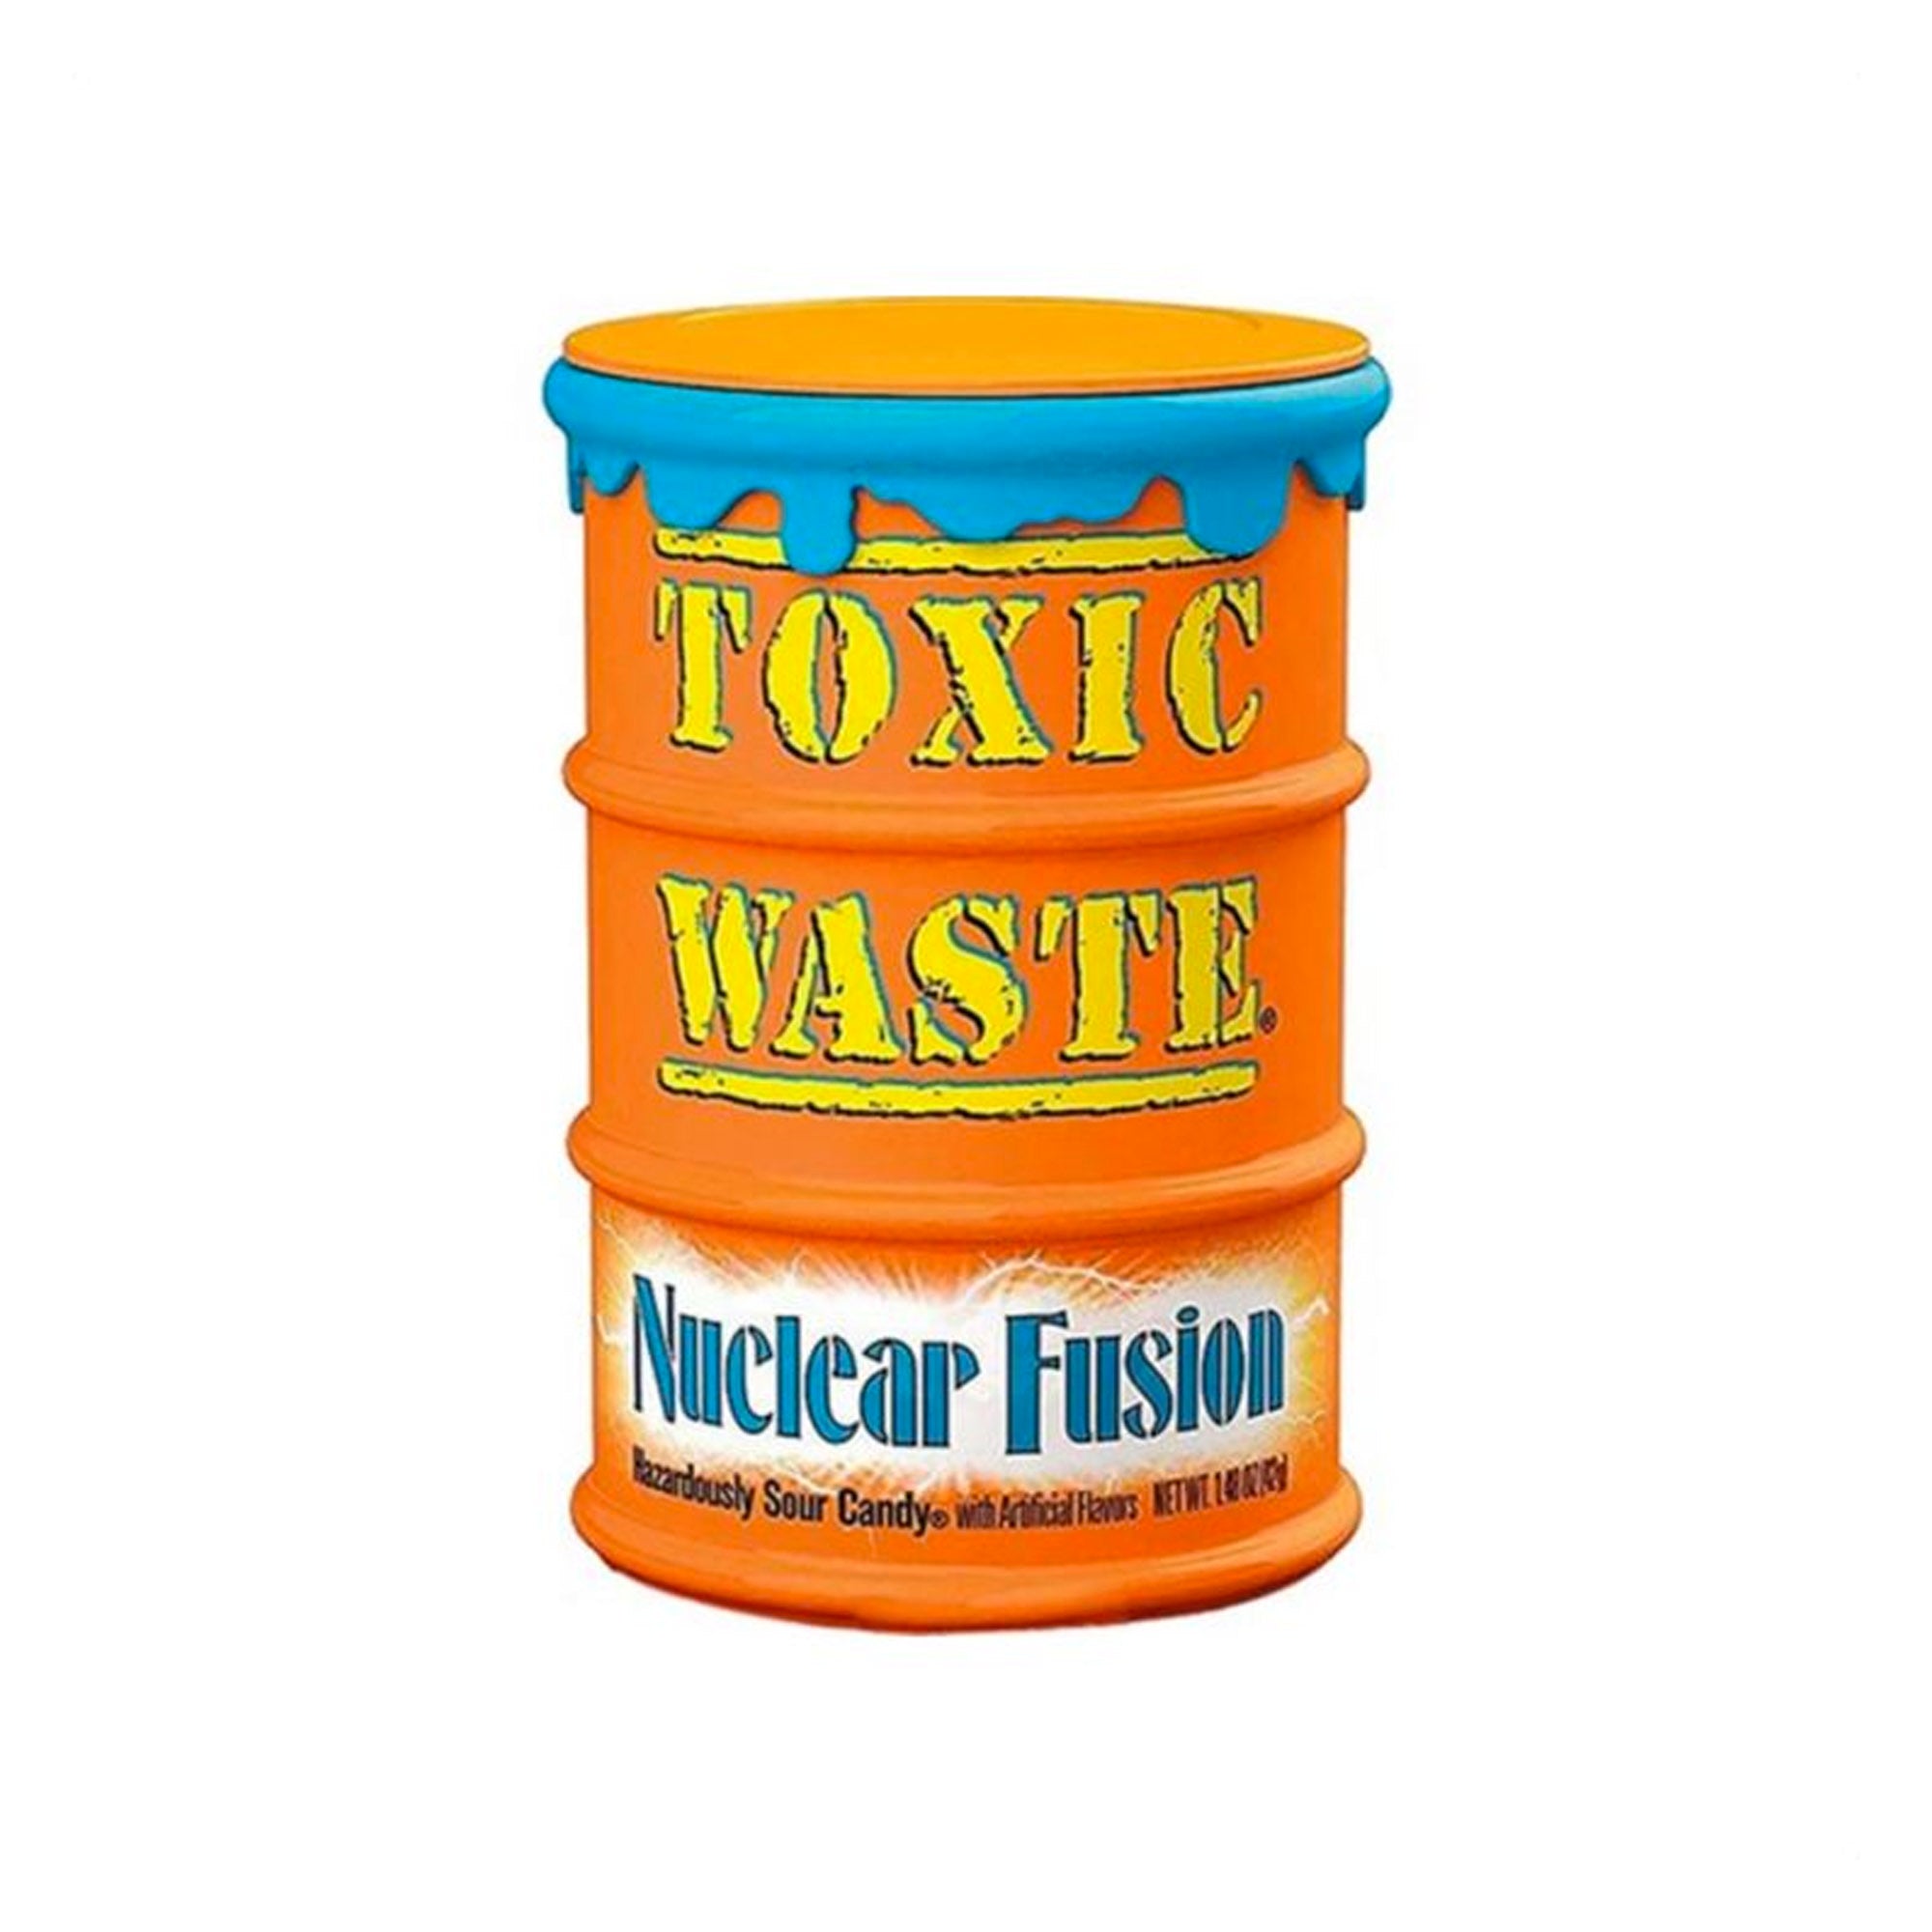 Токсик вейст. Toxic waste конфеты. Леденцы Toxic waste. Супер кислые конфеты Toxic waste. Конфеты Toxic waste hazardously Sour Candy (желтая банка) 42г 1/12.